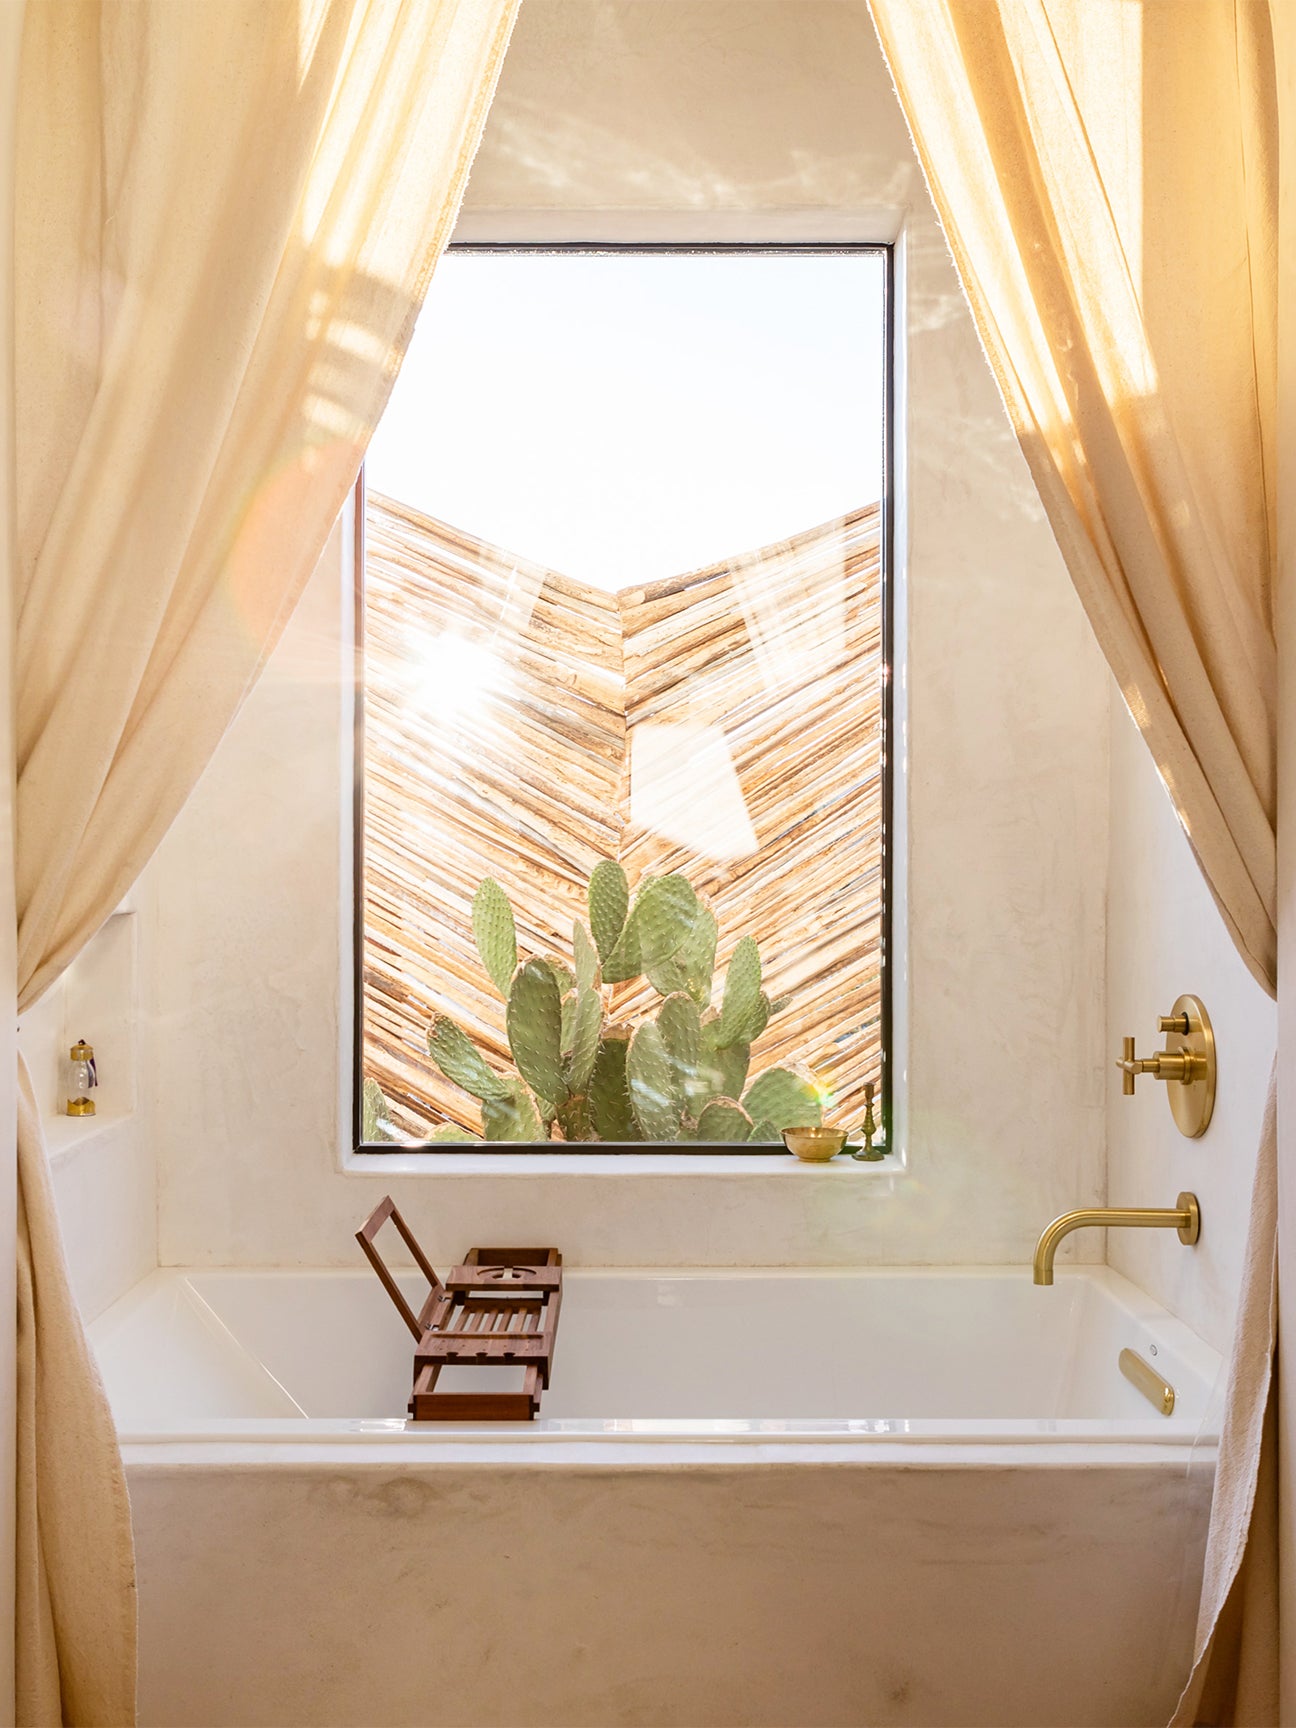 Plaster bath tub with cream curtains